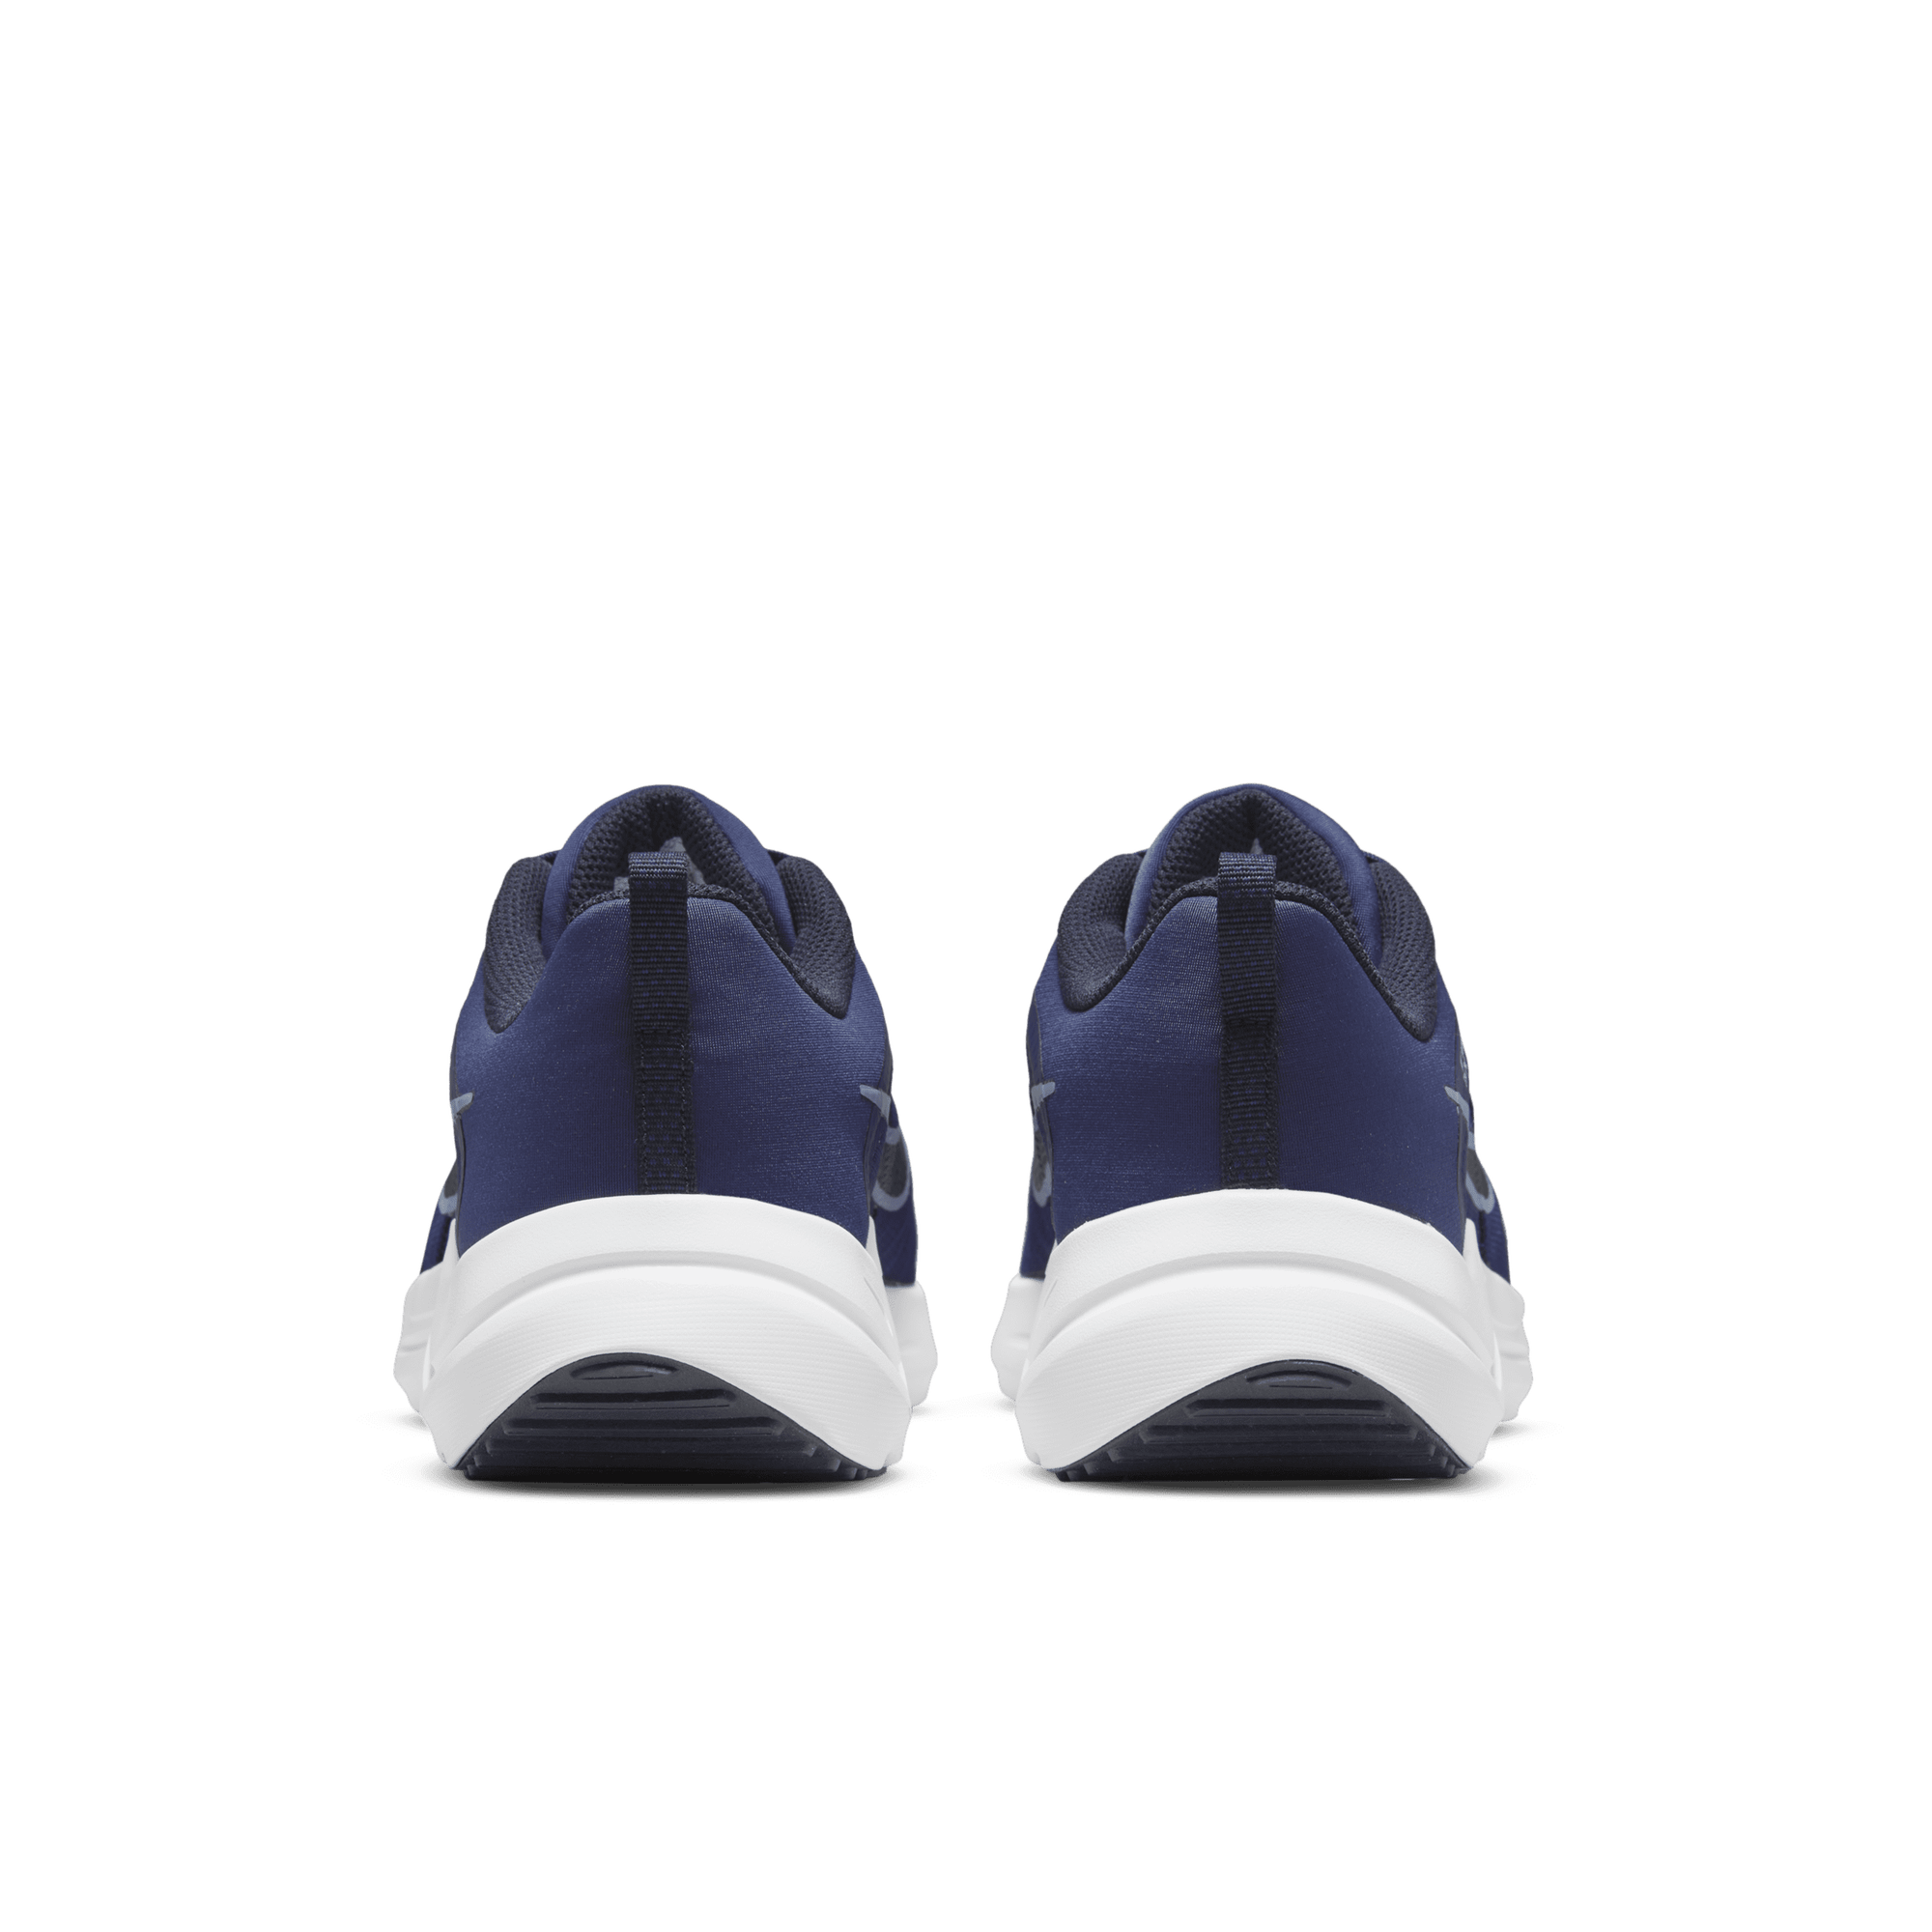 Shop Downshifter 12 Men's Road Running Shoes | Nike UAE